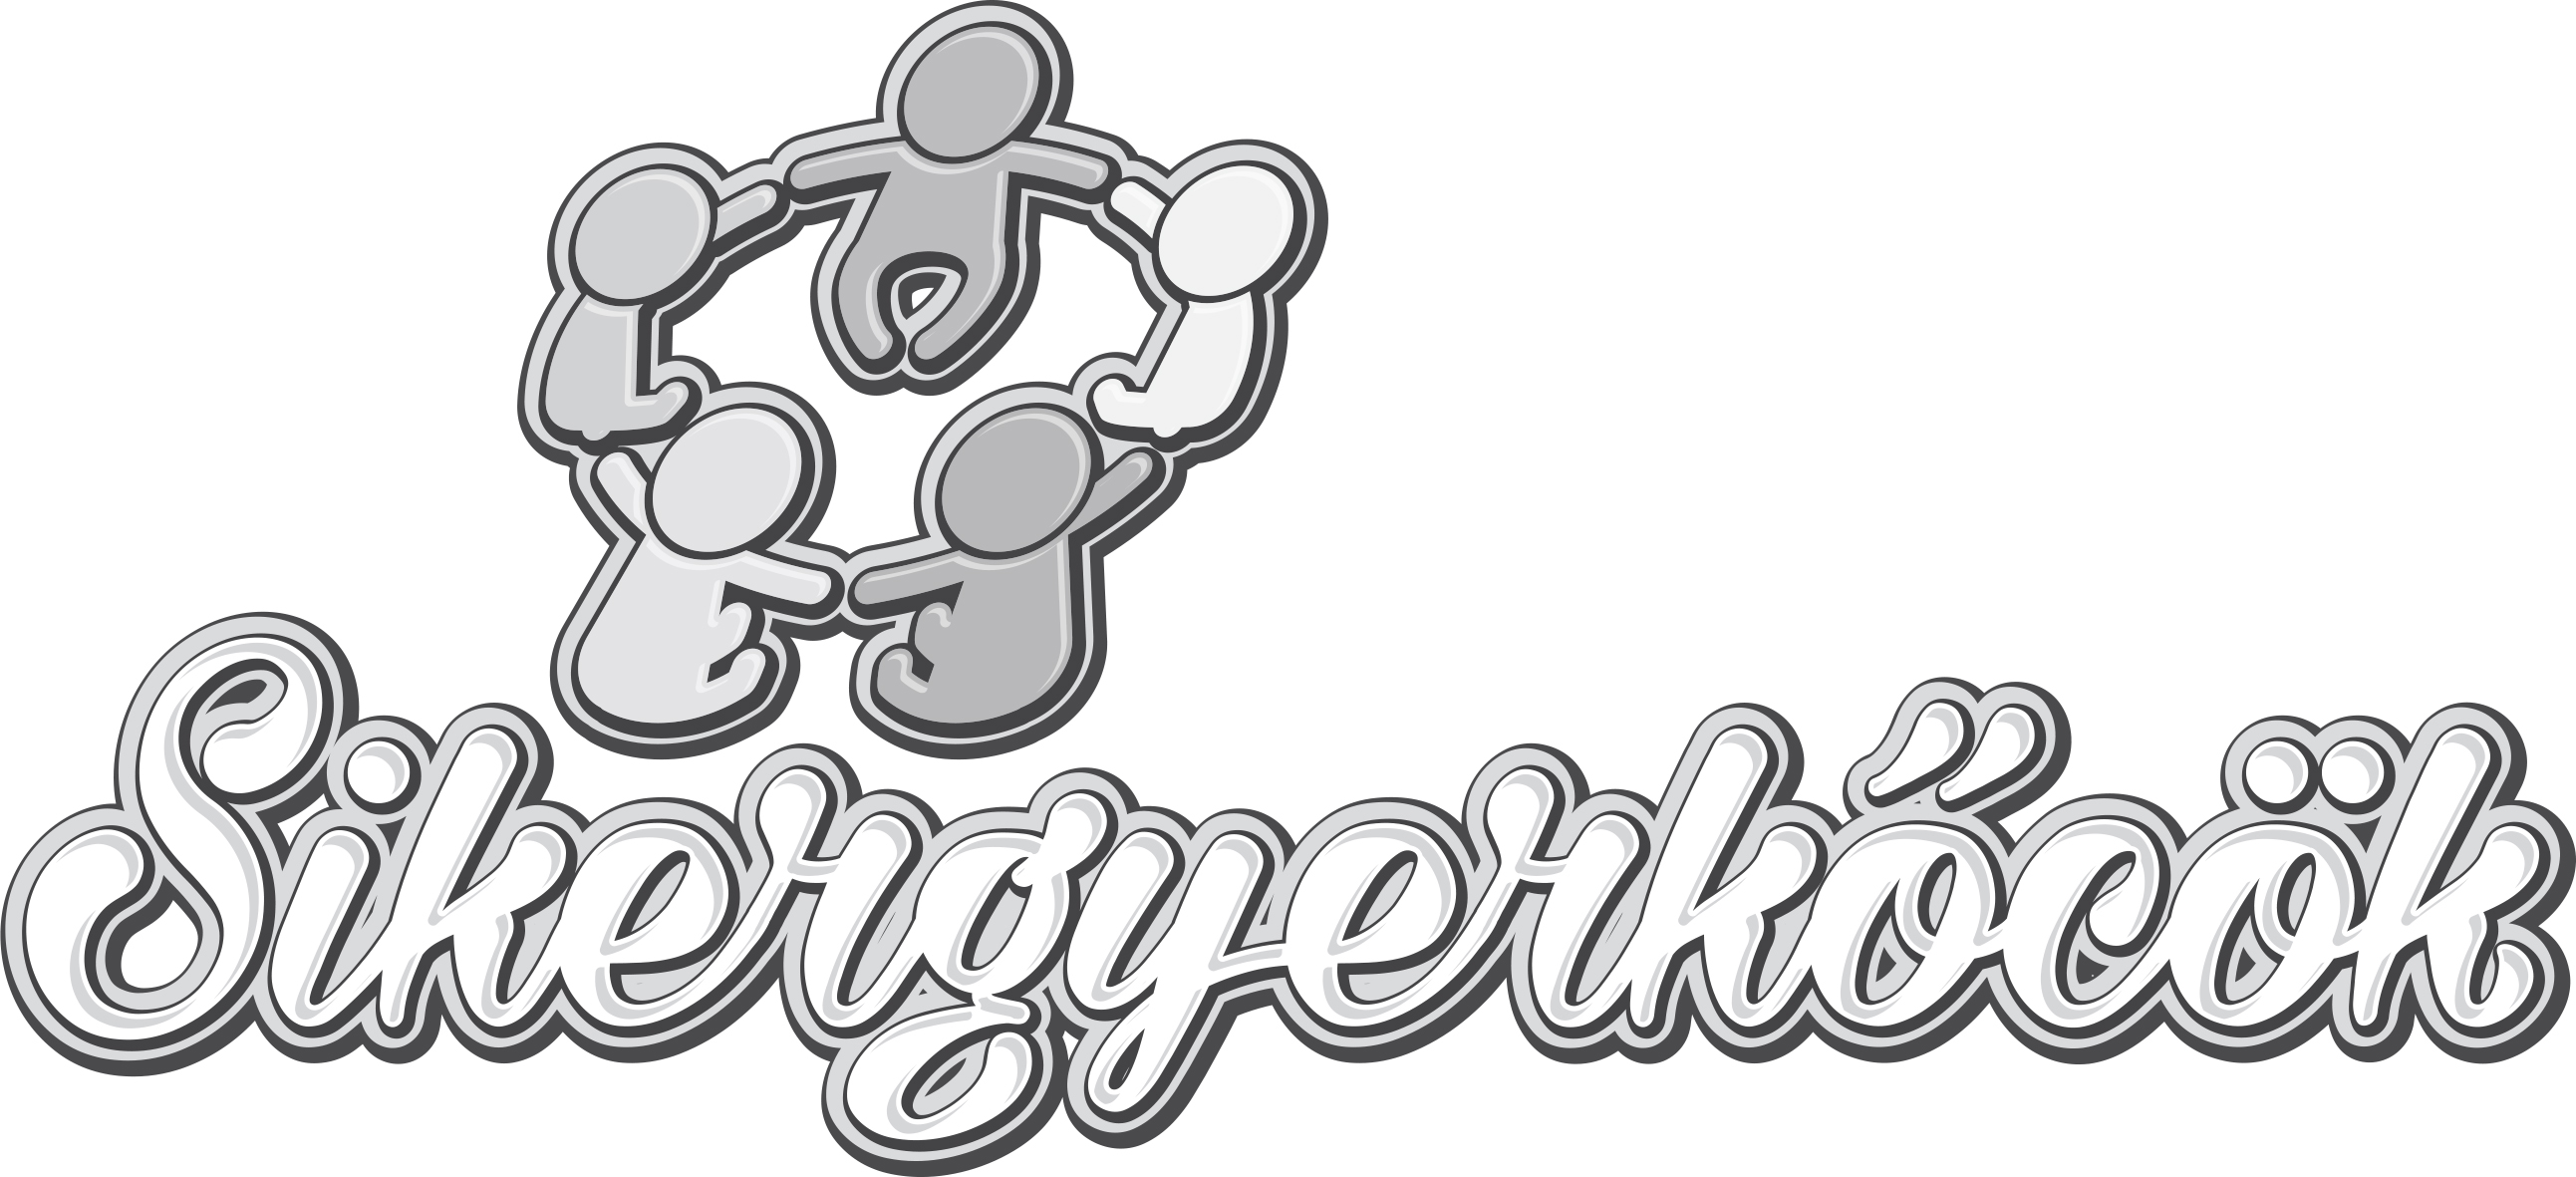 sikergyerkocok_logo_1_-2.jpg